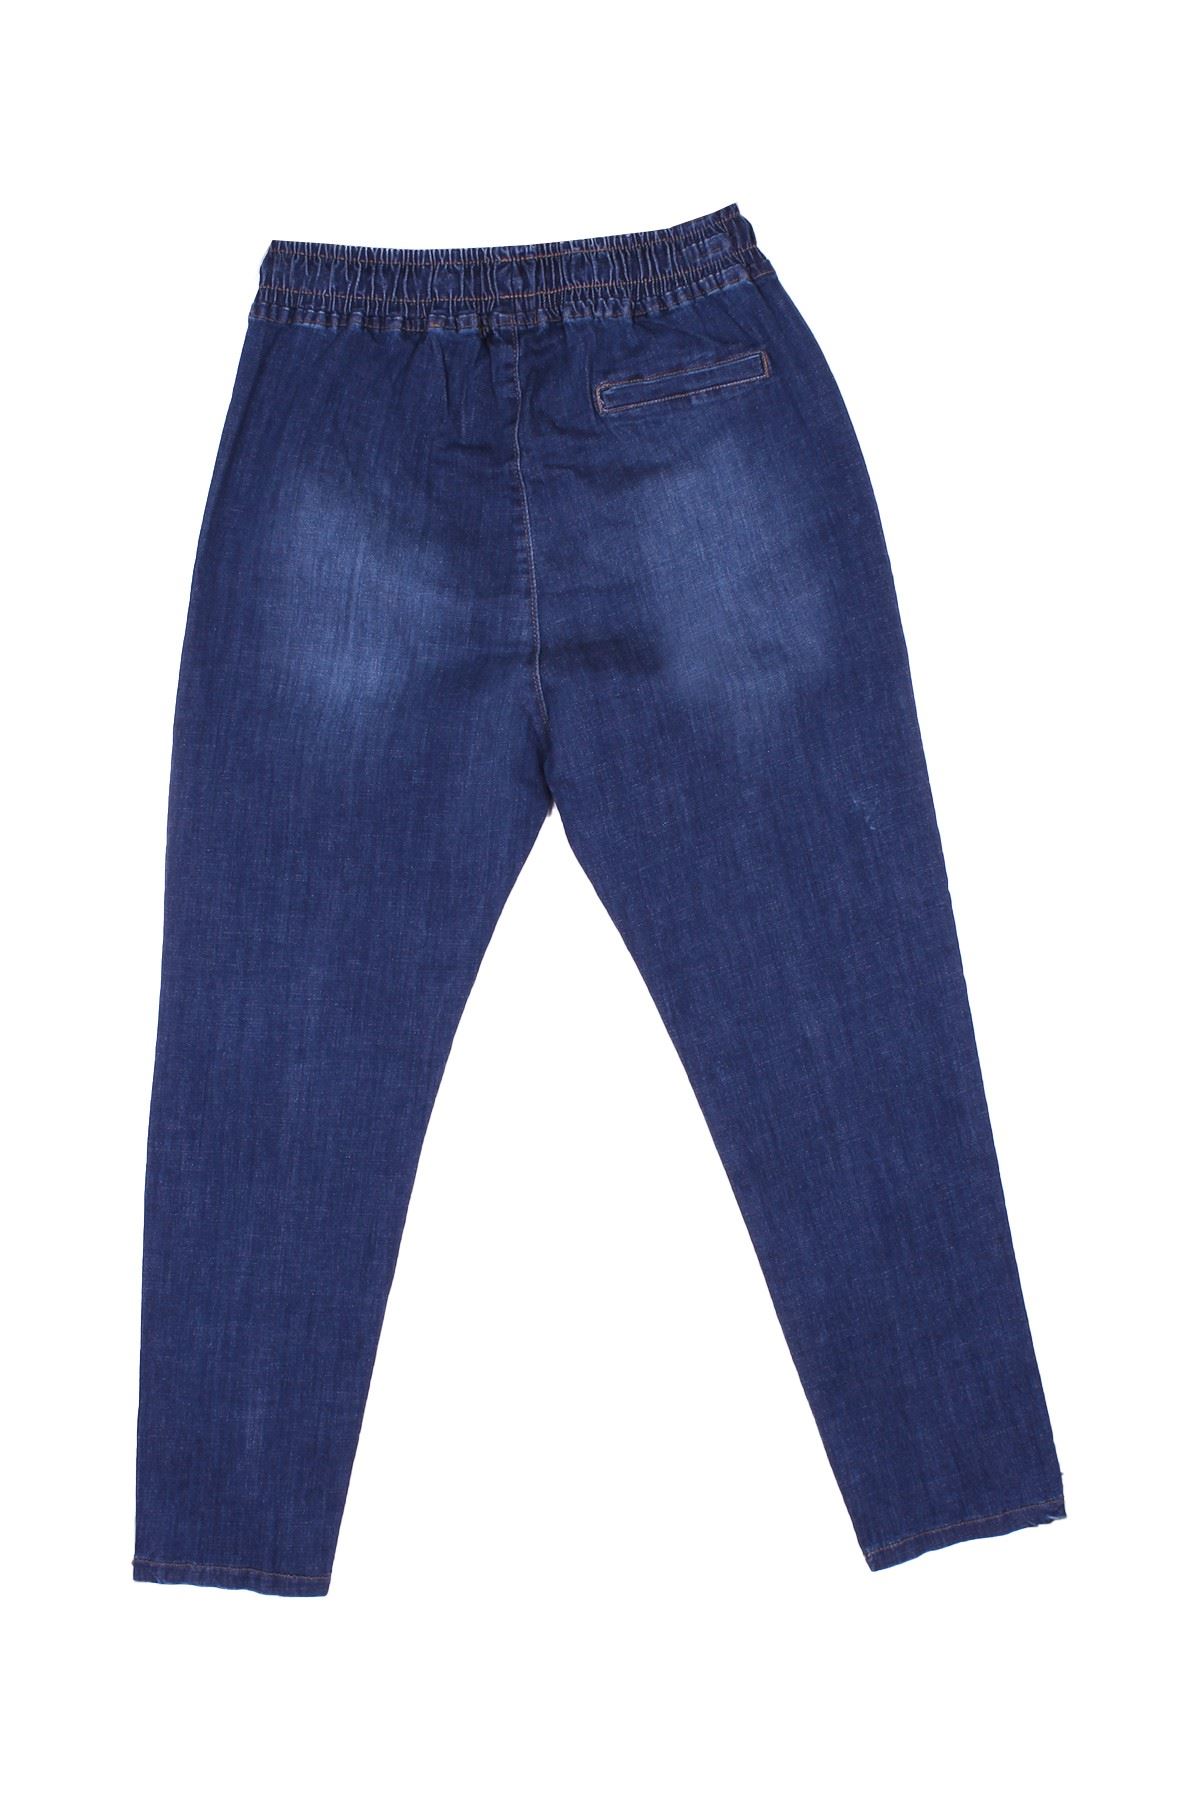 Giyinsen Kadın Mavi Jean Pantolon - 23KD52000005